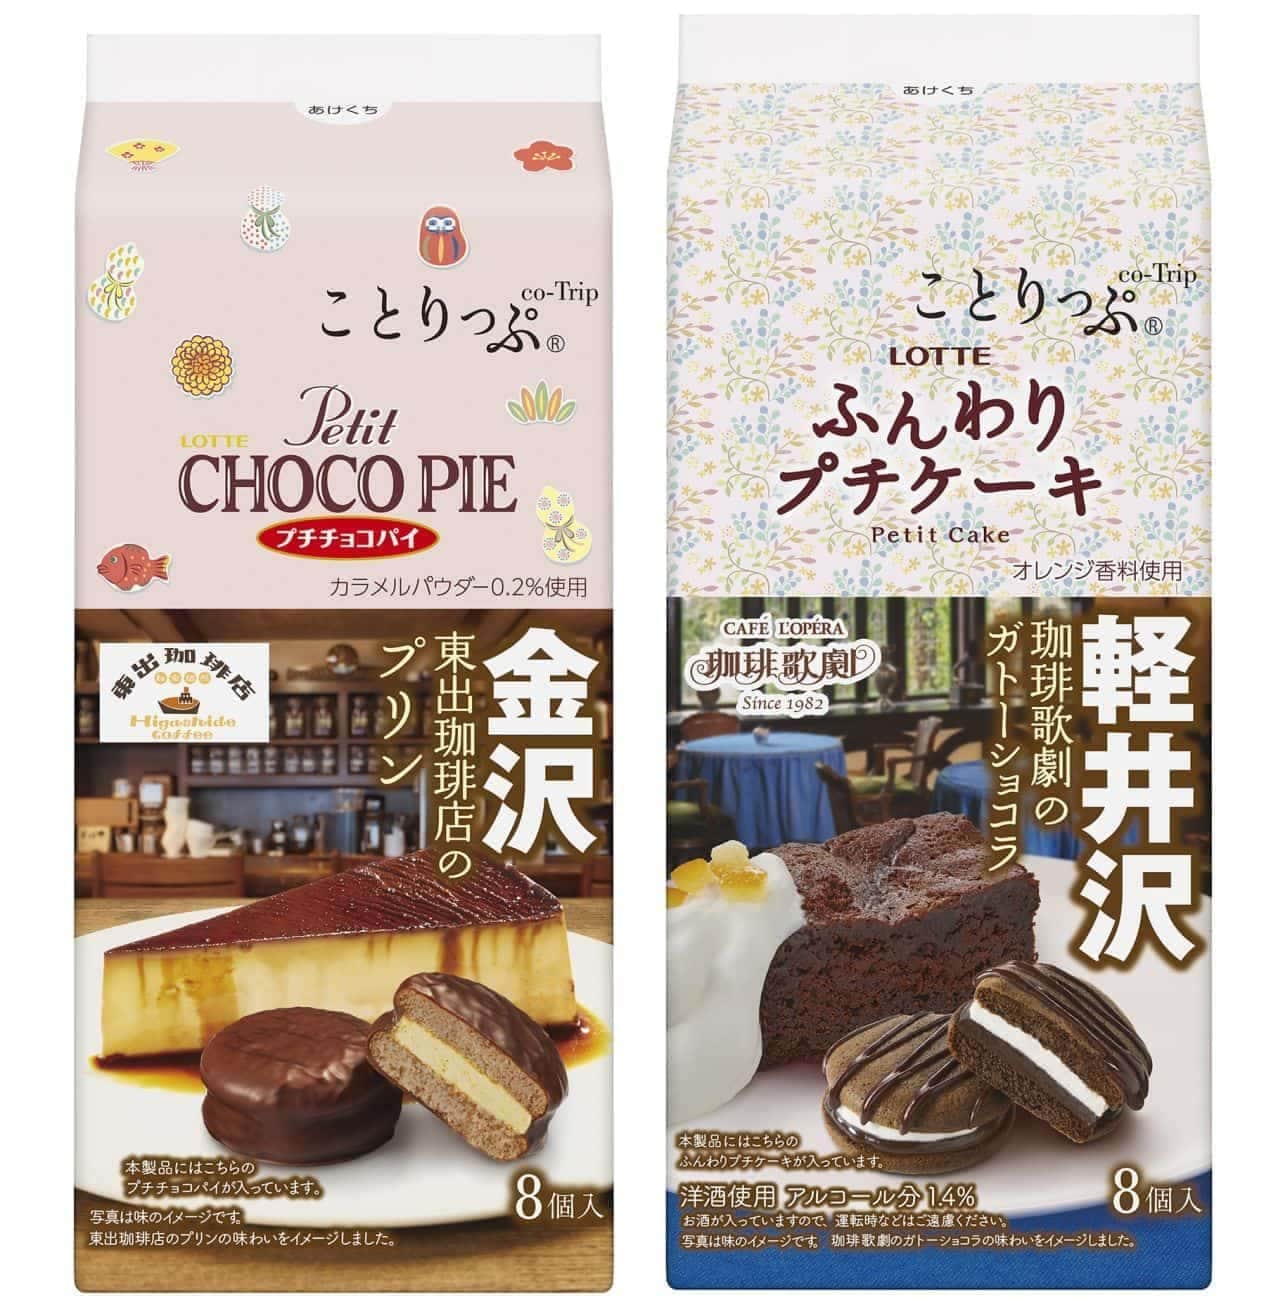 Lotte: "Kotorippu Petit Chocolate Pie [Higashiide Coffee Shop's Pudding]" and "Kotorippu Funwari Petit Cake [Coffee Revue's Gateau Chocolate]".